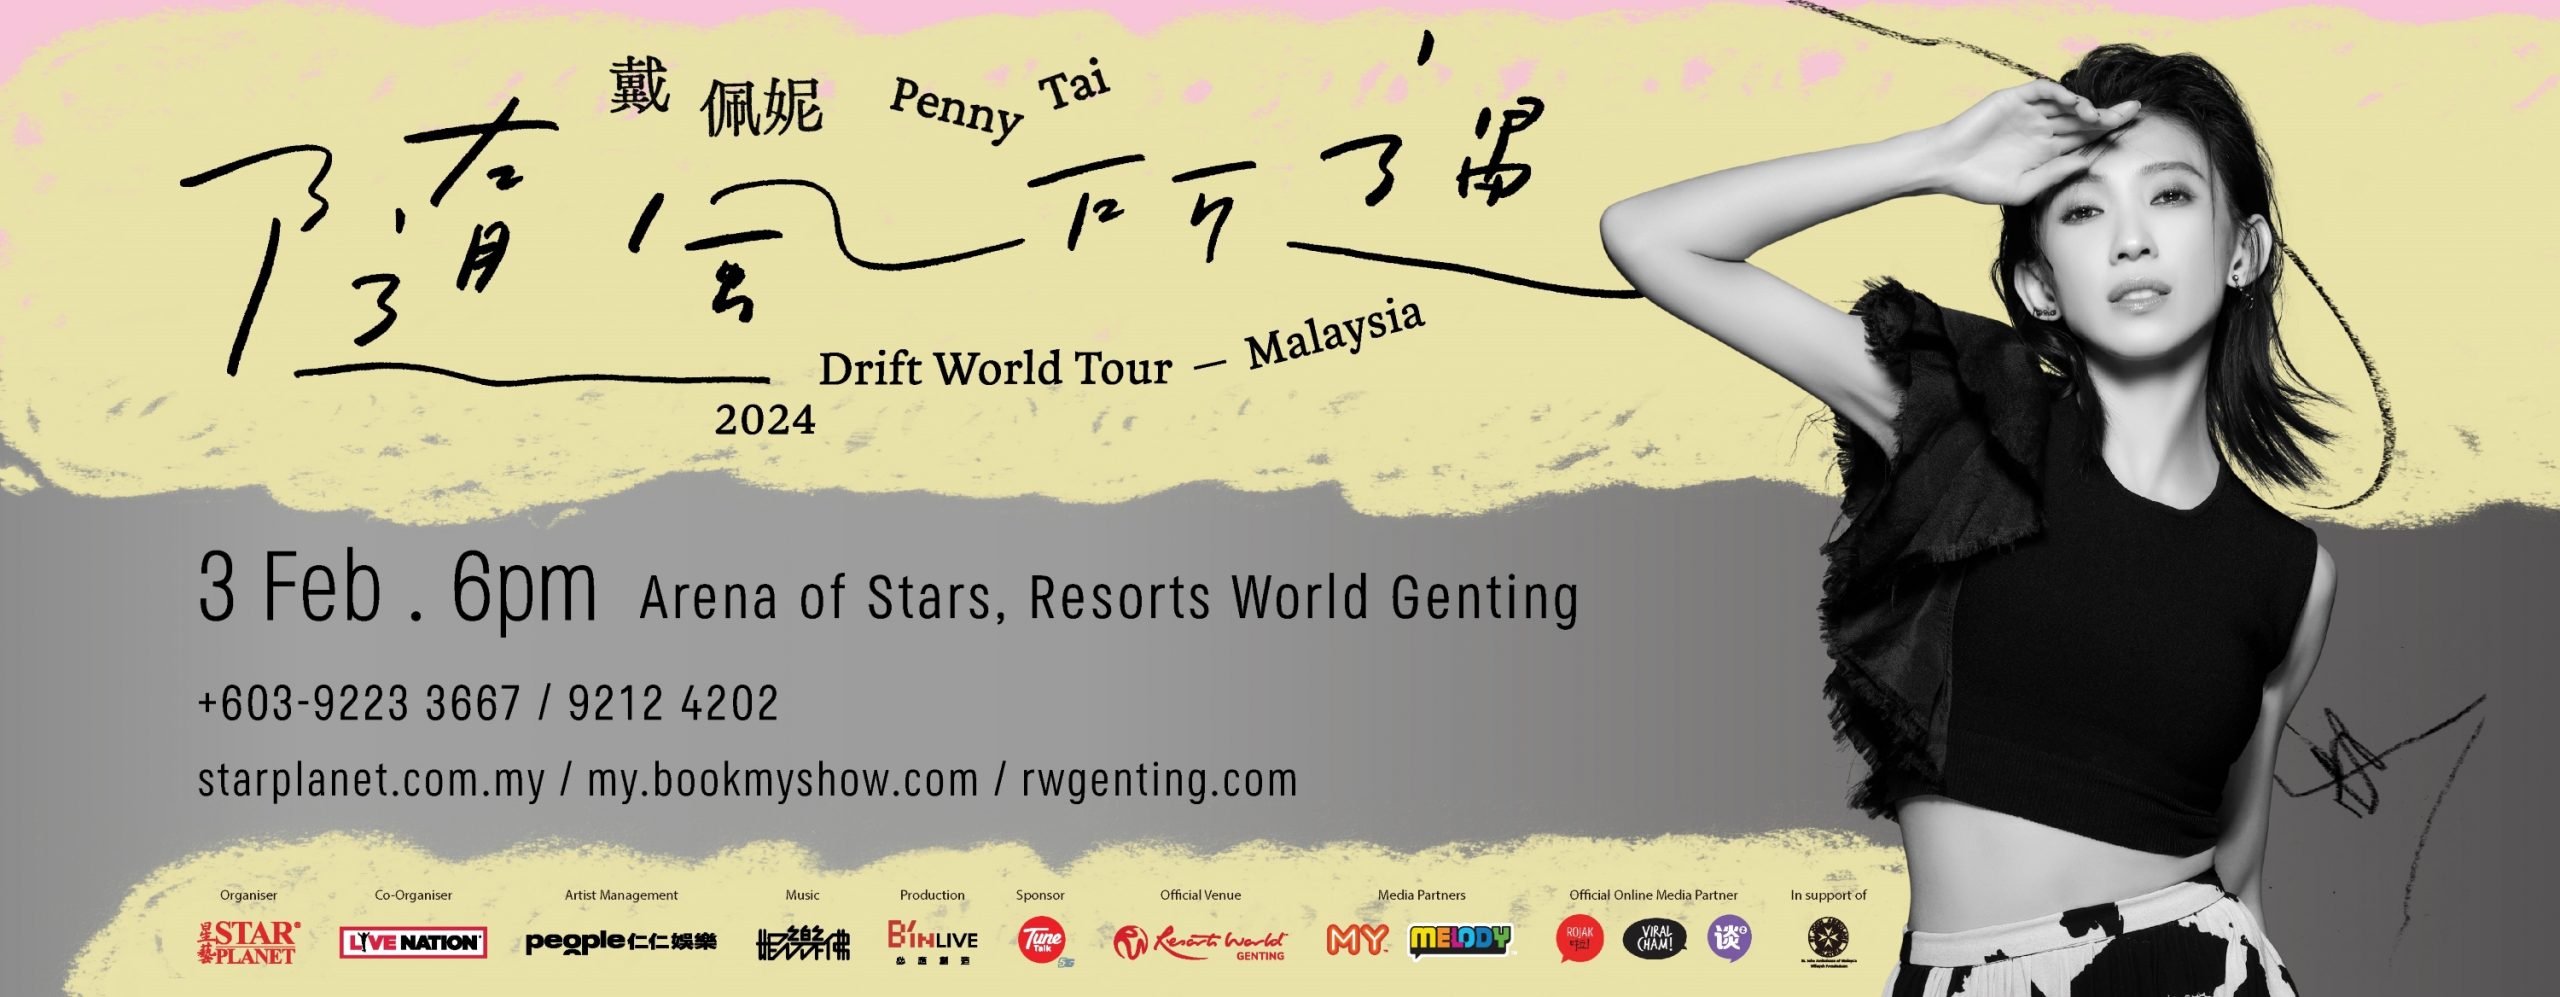 penny-daipeini-worldtour-concert-malaysia